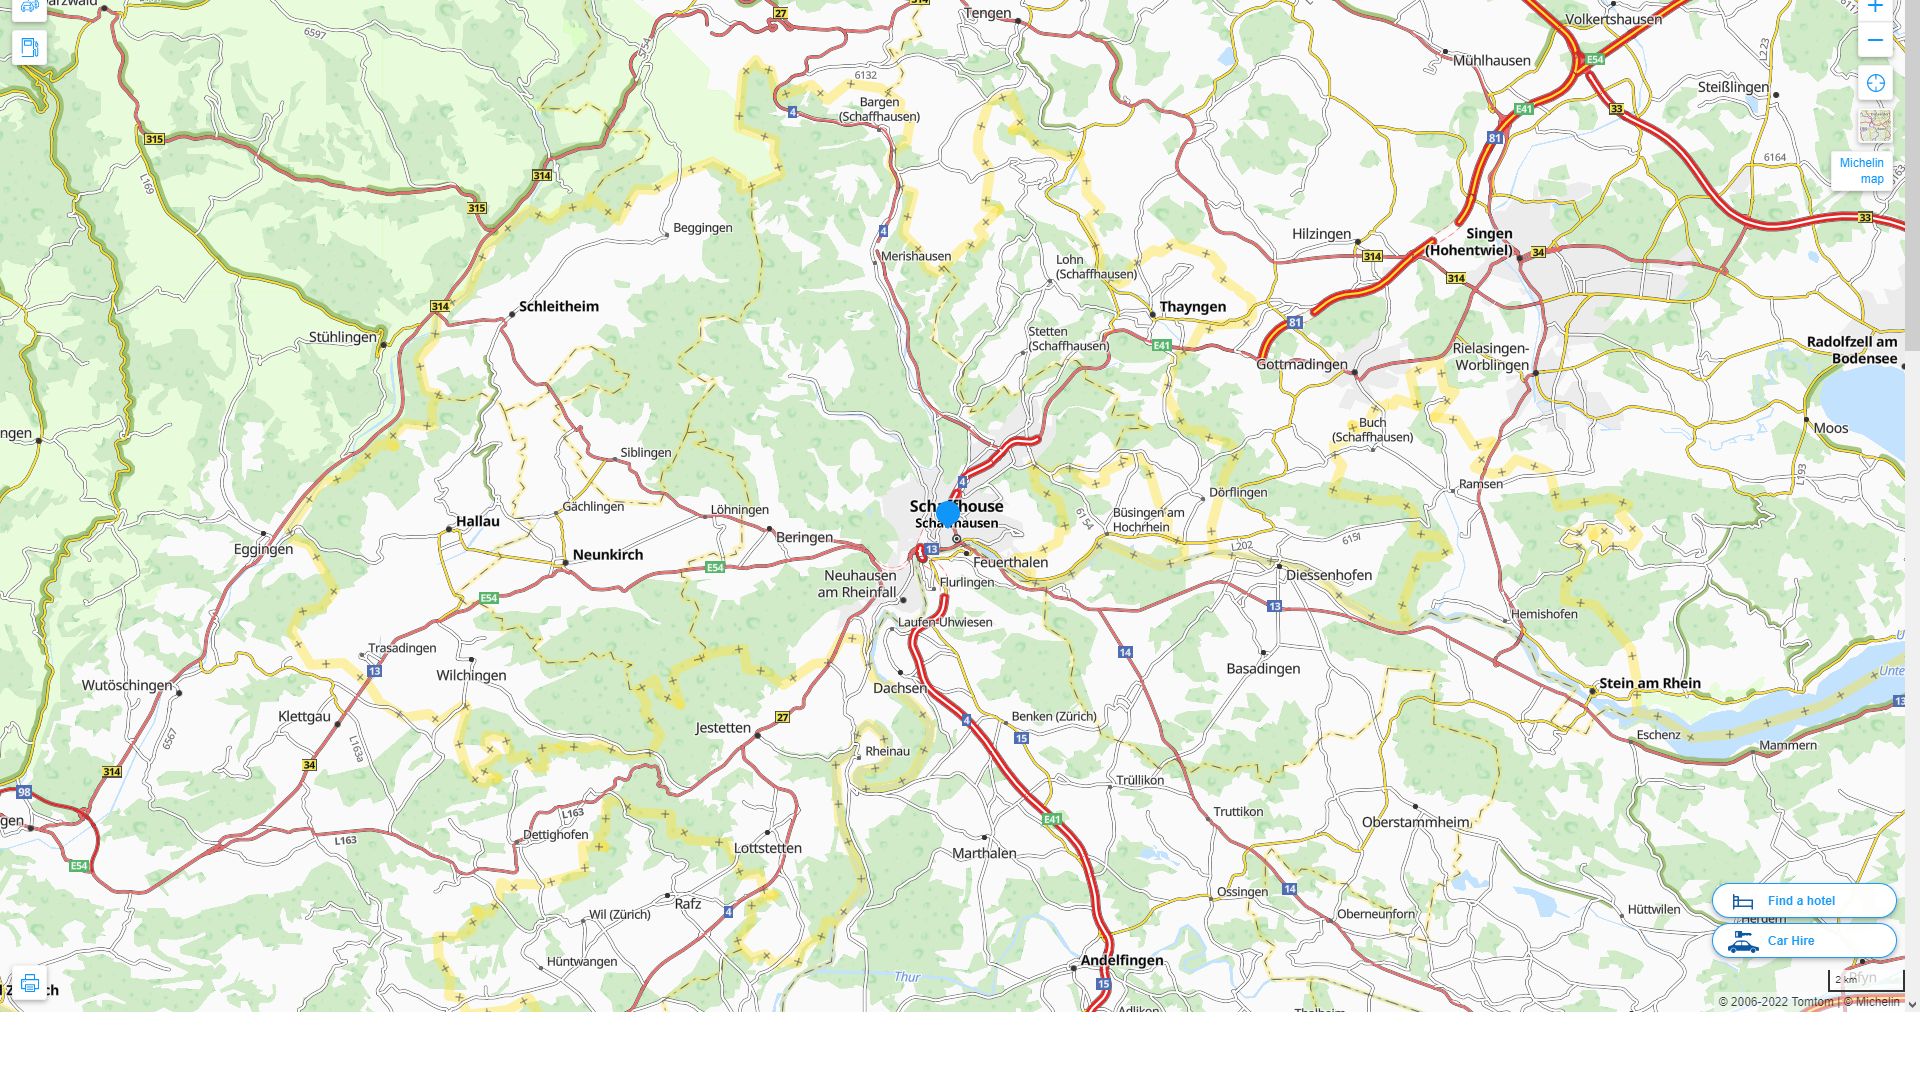 Schaffhausen Highway and Road Map